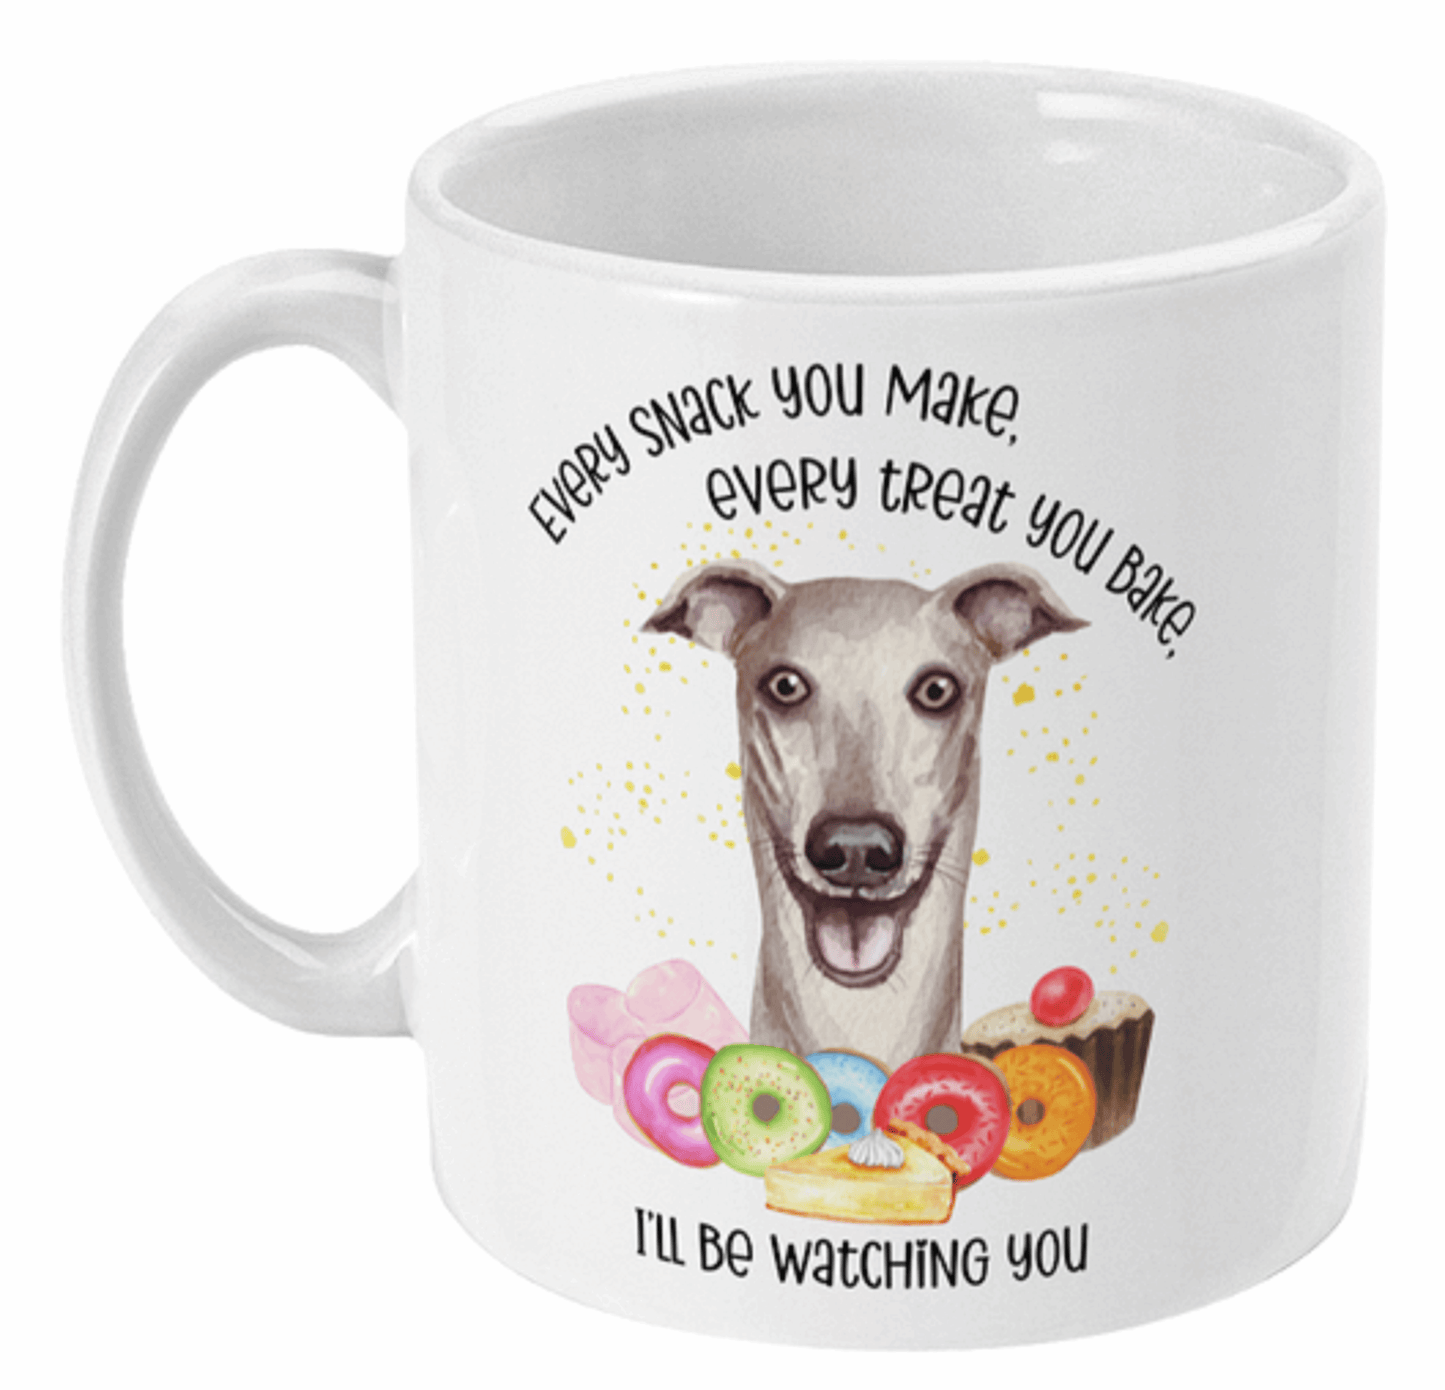  Funny Dog Every Snack You Make Coffee Mug by Free Spirit Accessories sold by Free Spirit Accessories